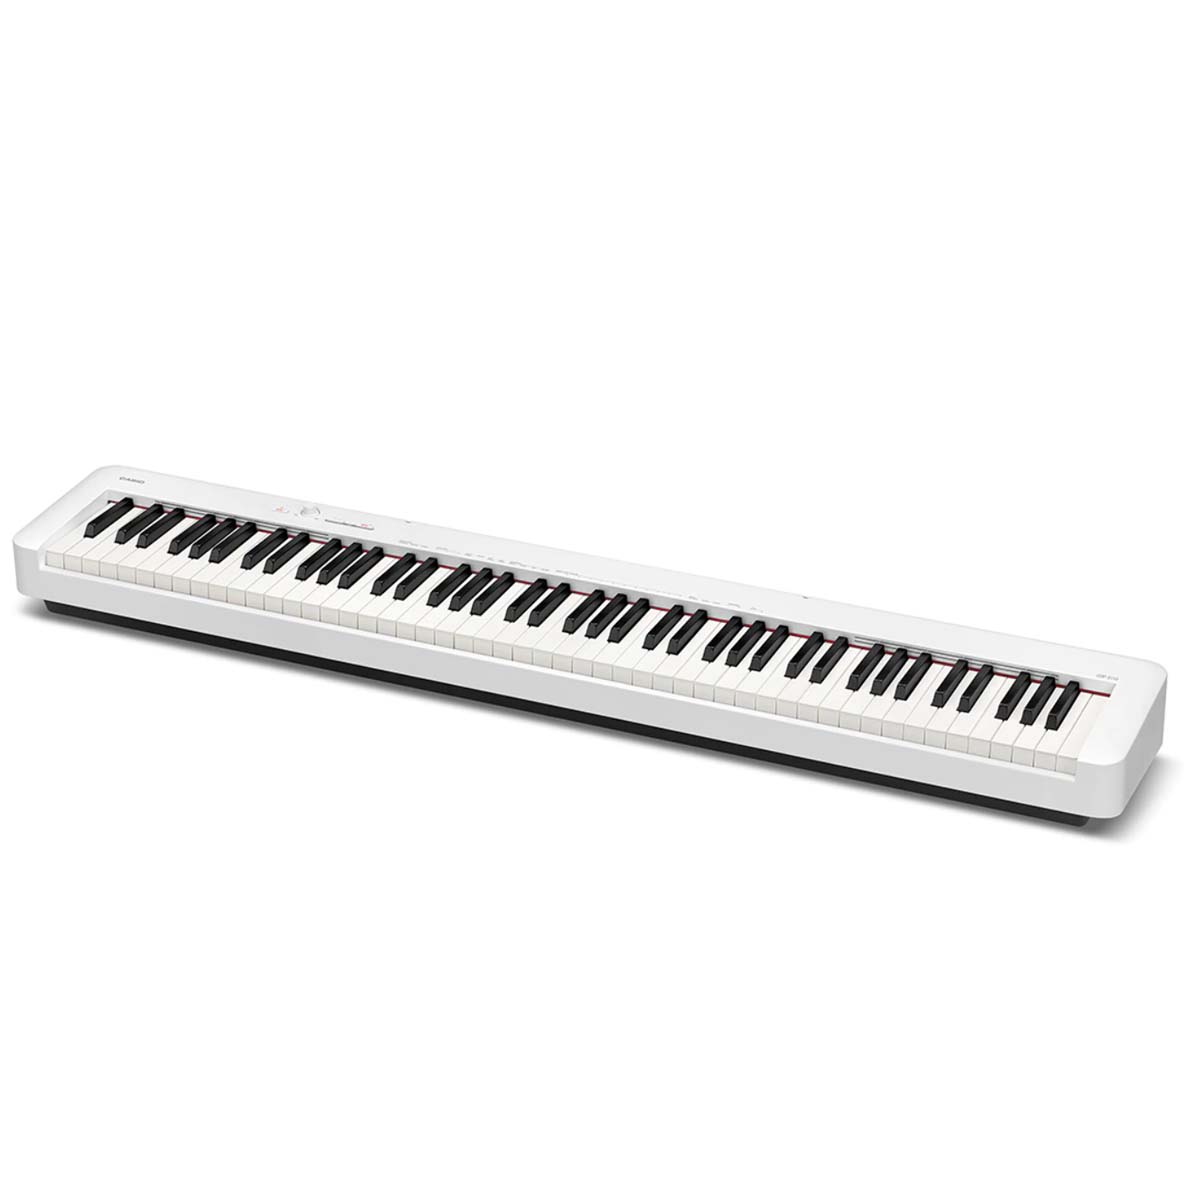 Casio CDP-S110 Digital Piano White